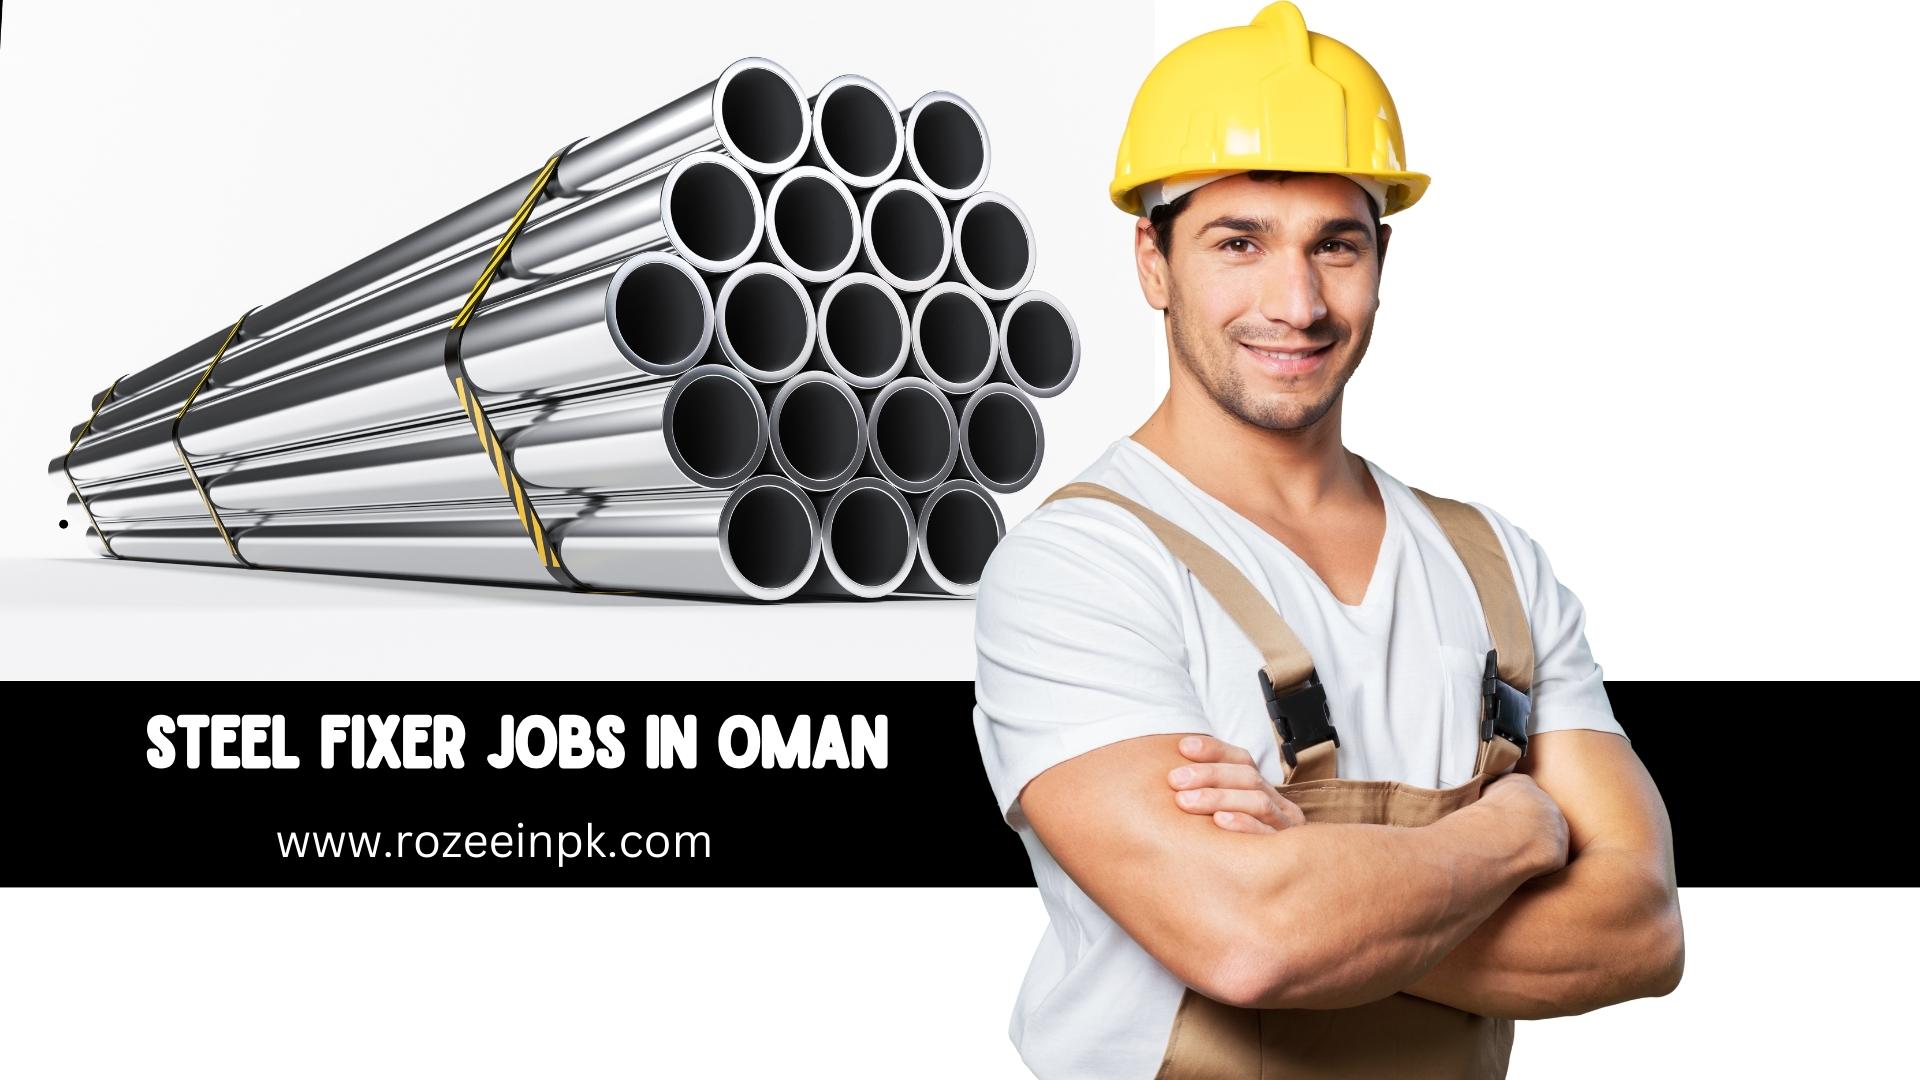 Aluminum fixer jobs in Oman